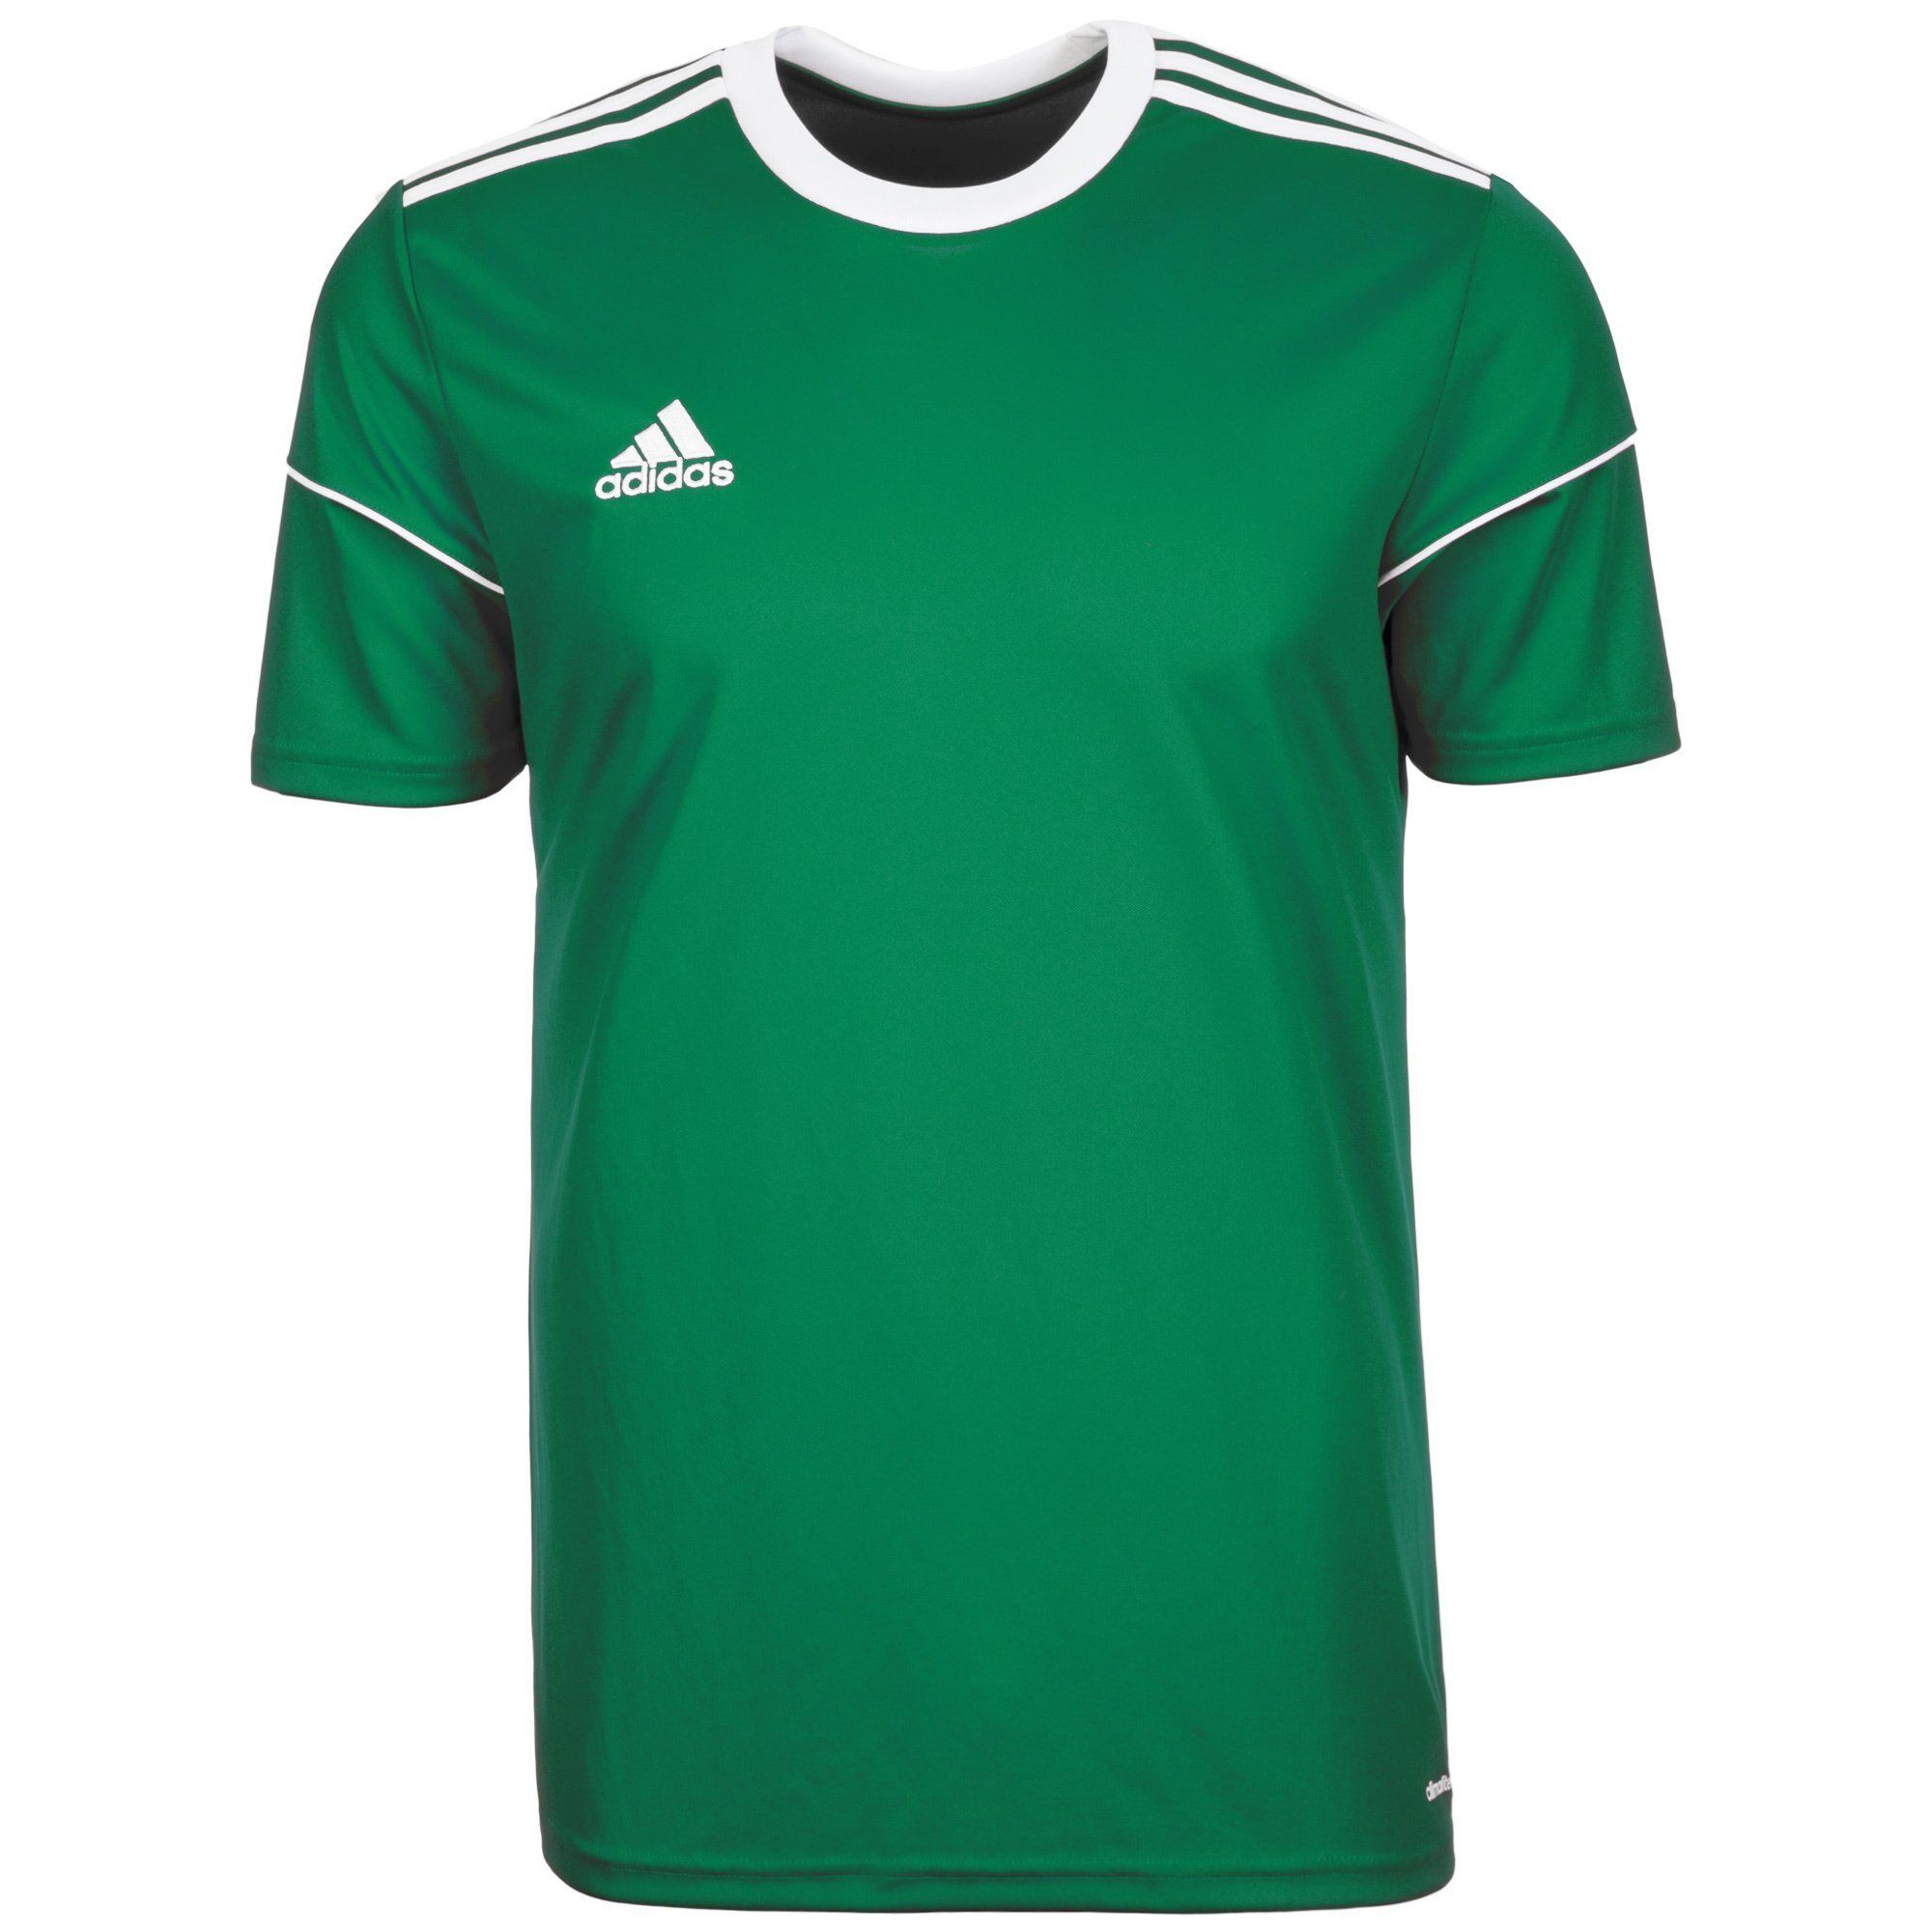 Adidas Performance Fußballtrikot »Squadra 17«, grün-weiß